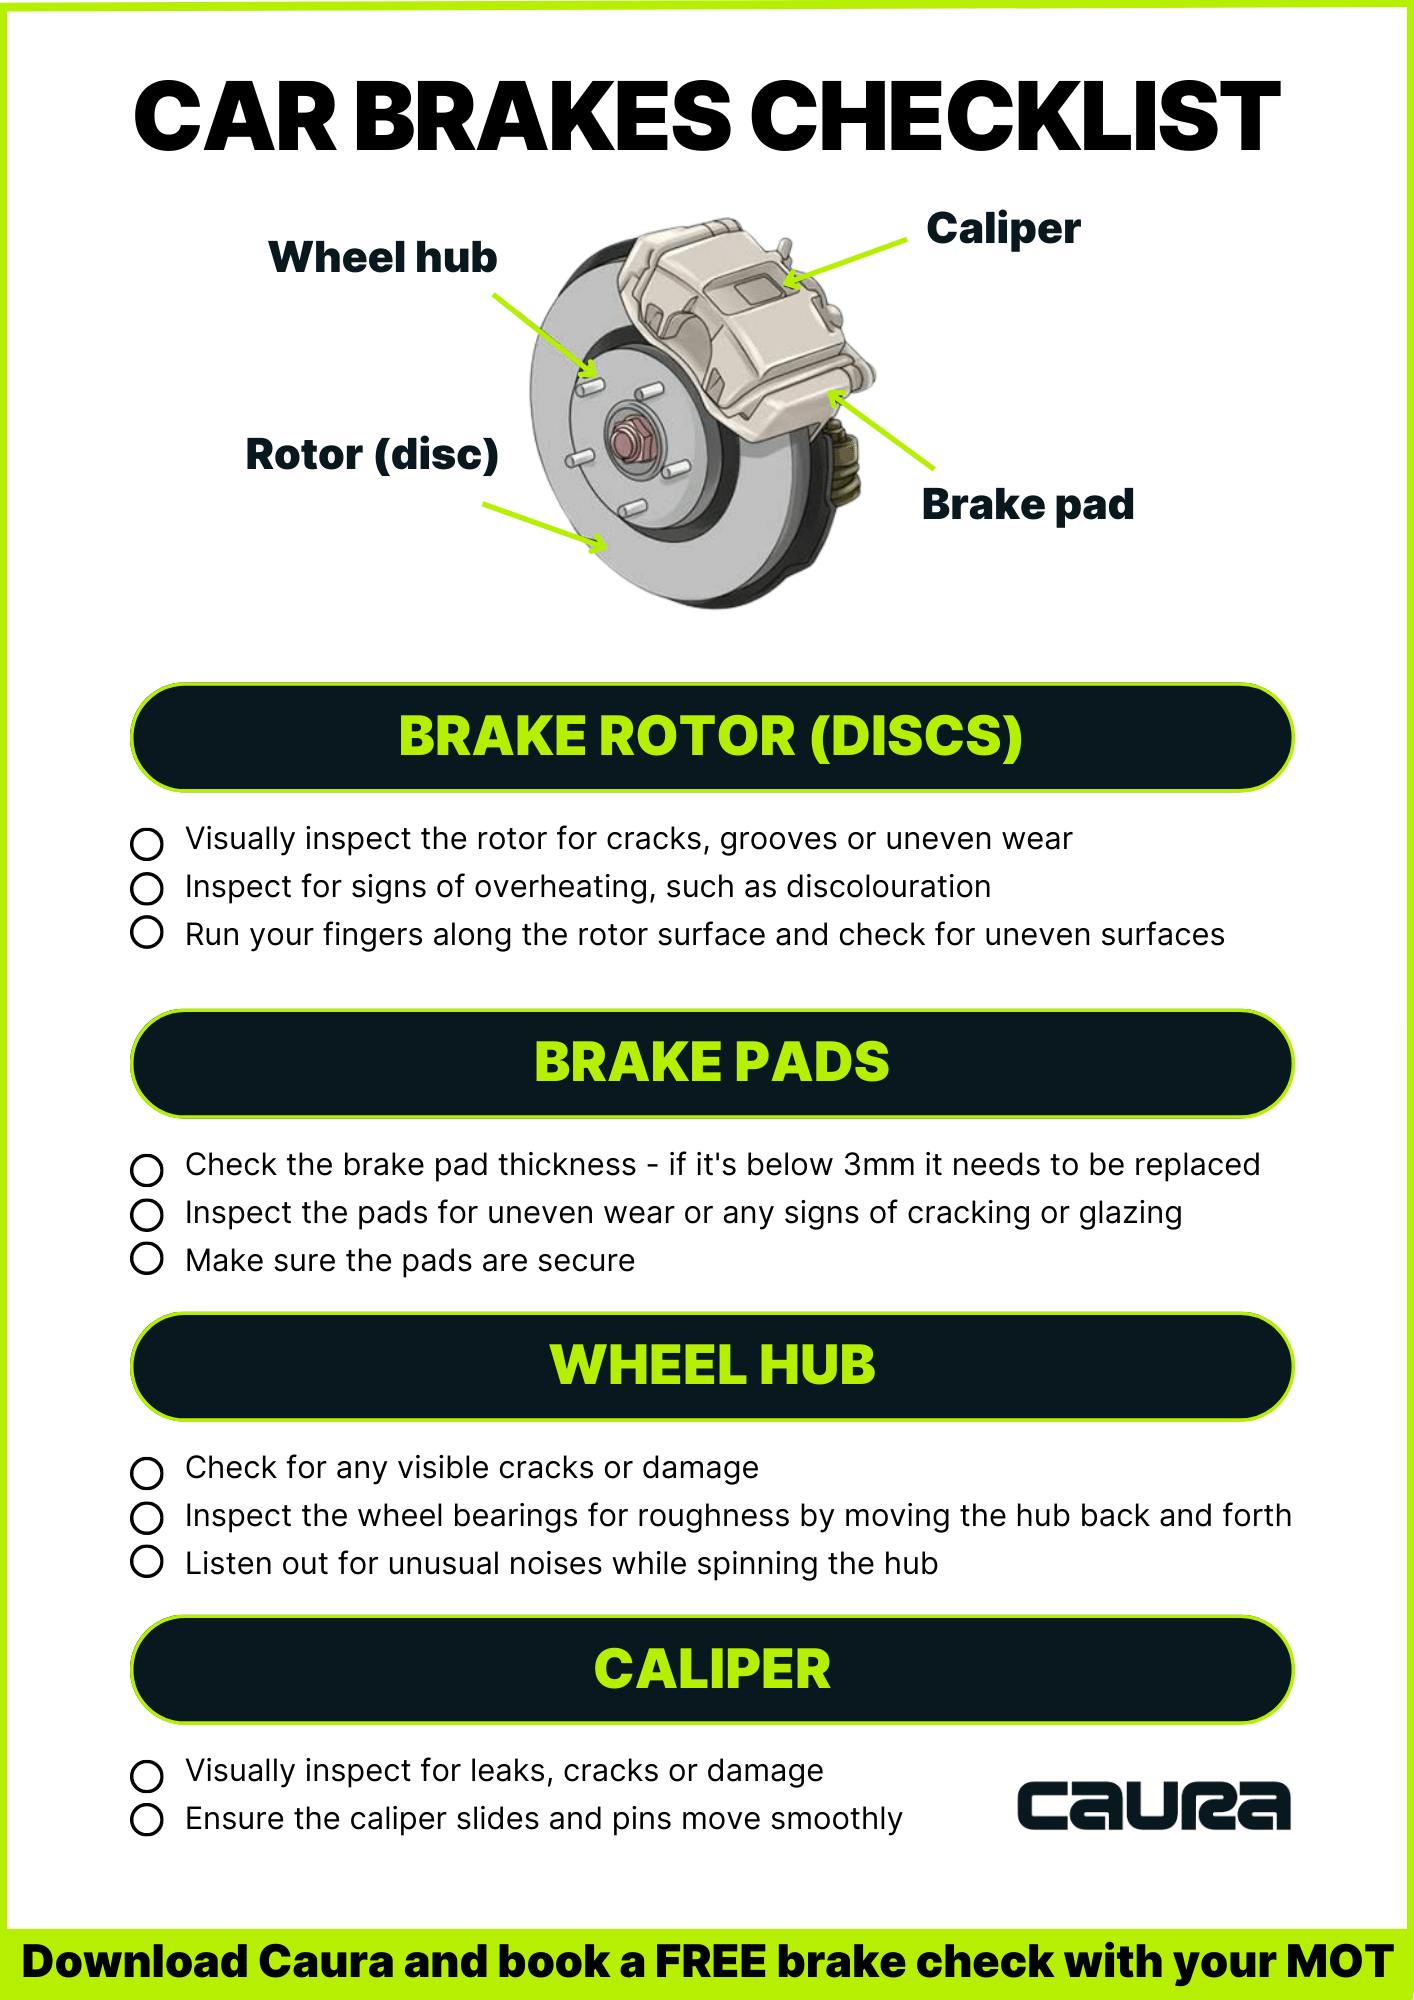 MOT car brakes checklist for drivers